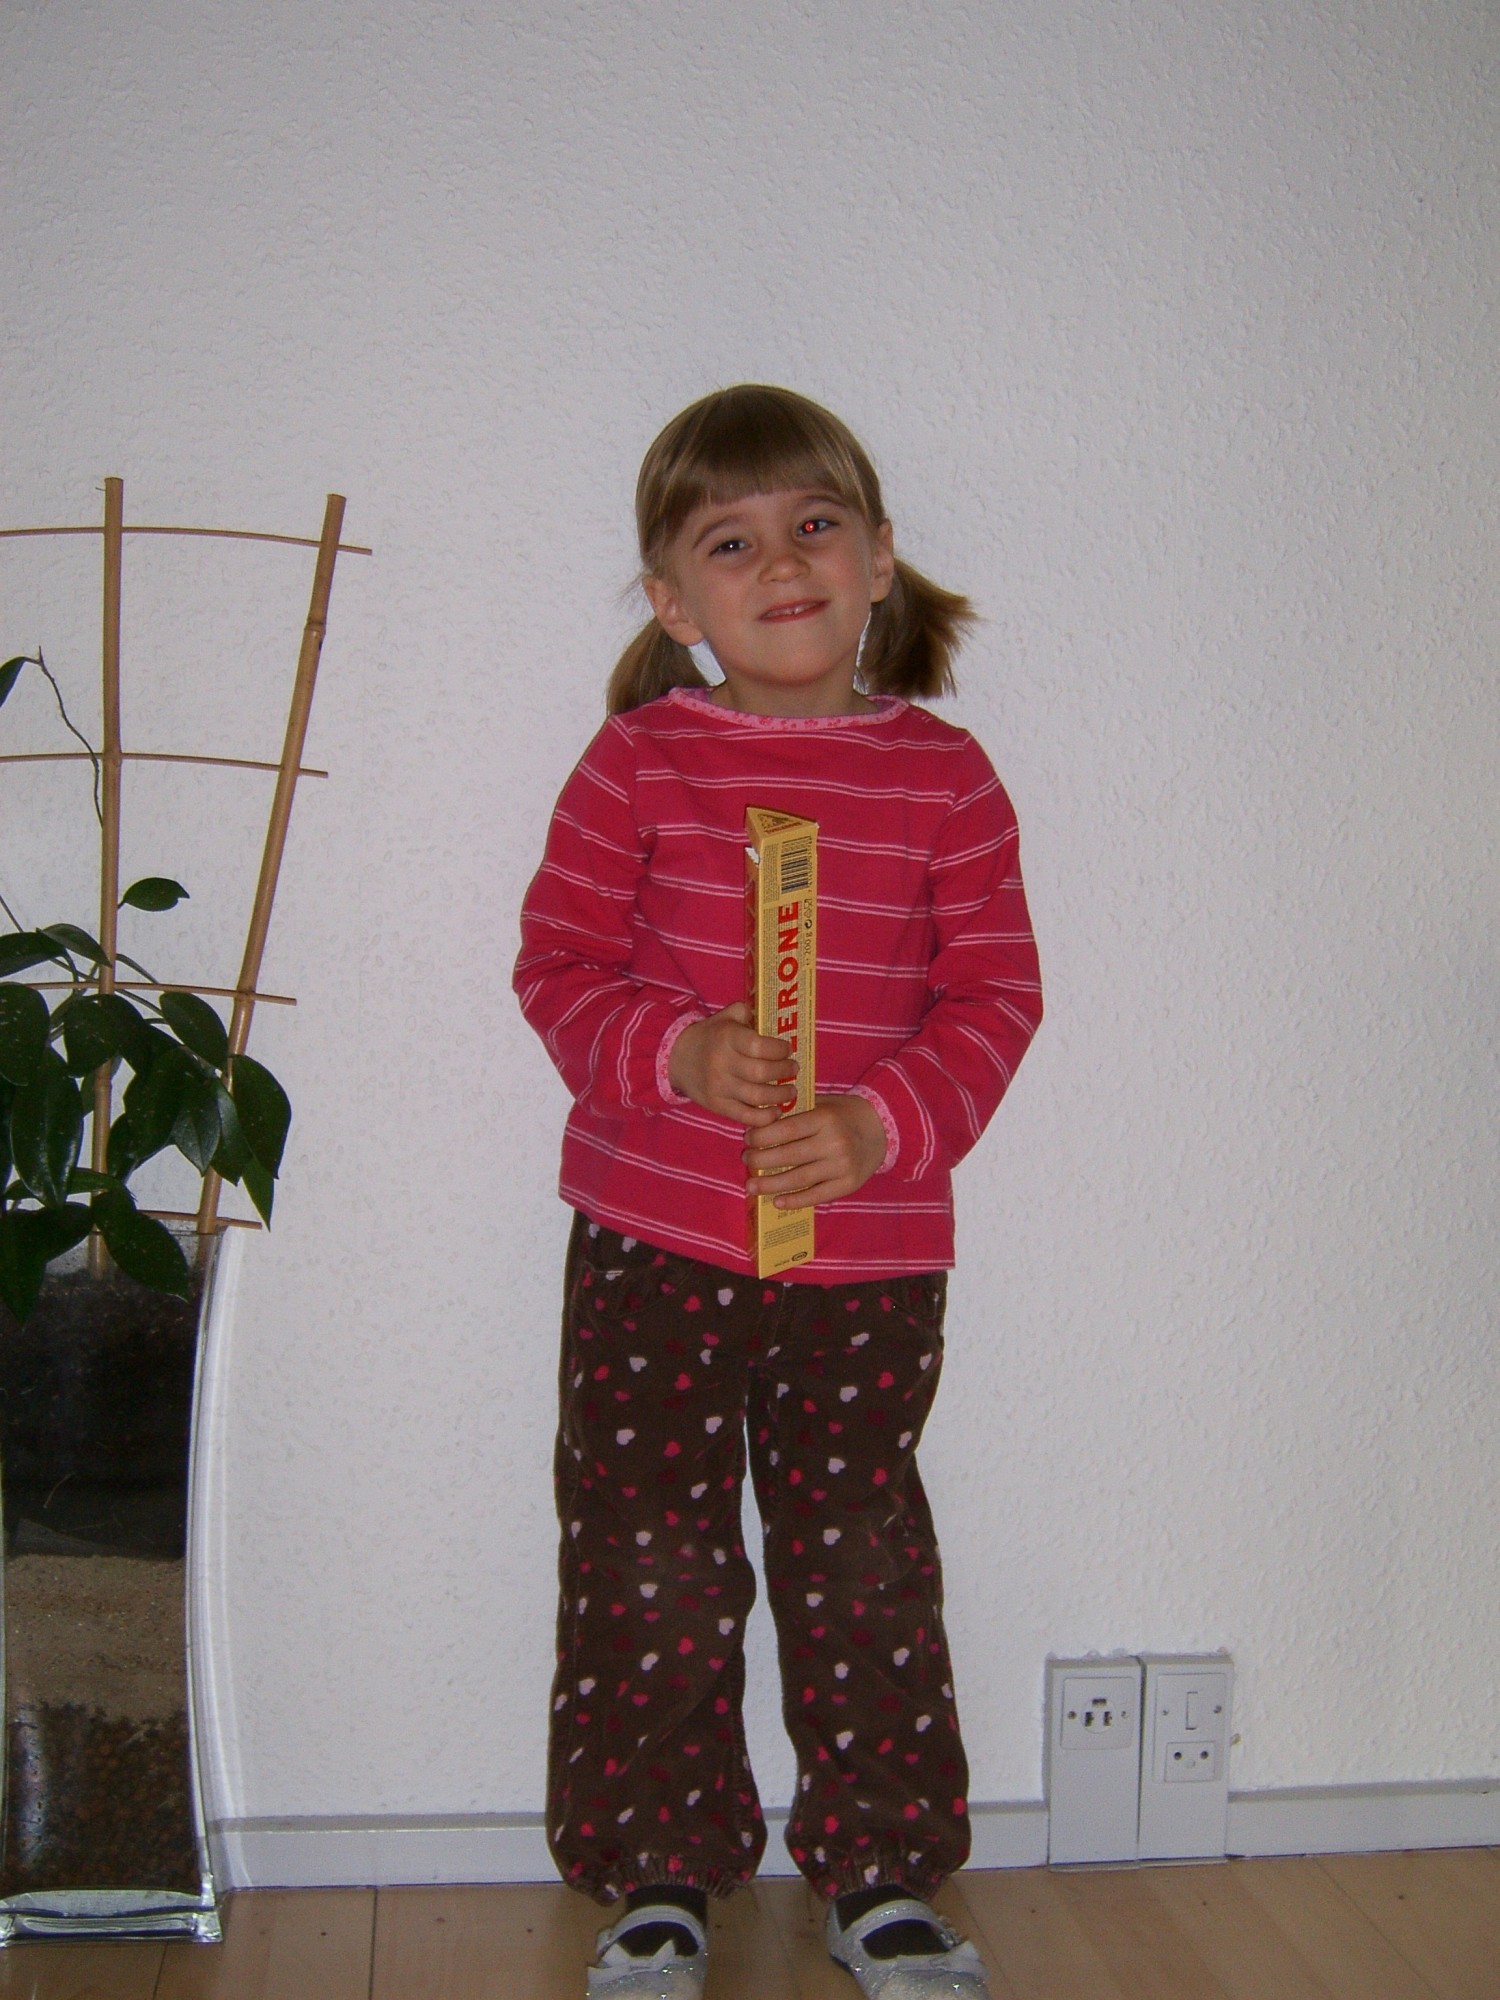 Marikkas 5. Toblerone billede. (4 år)